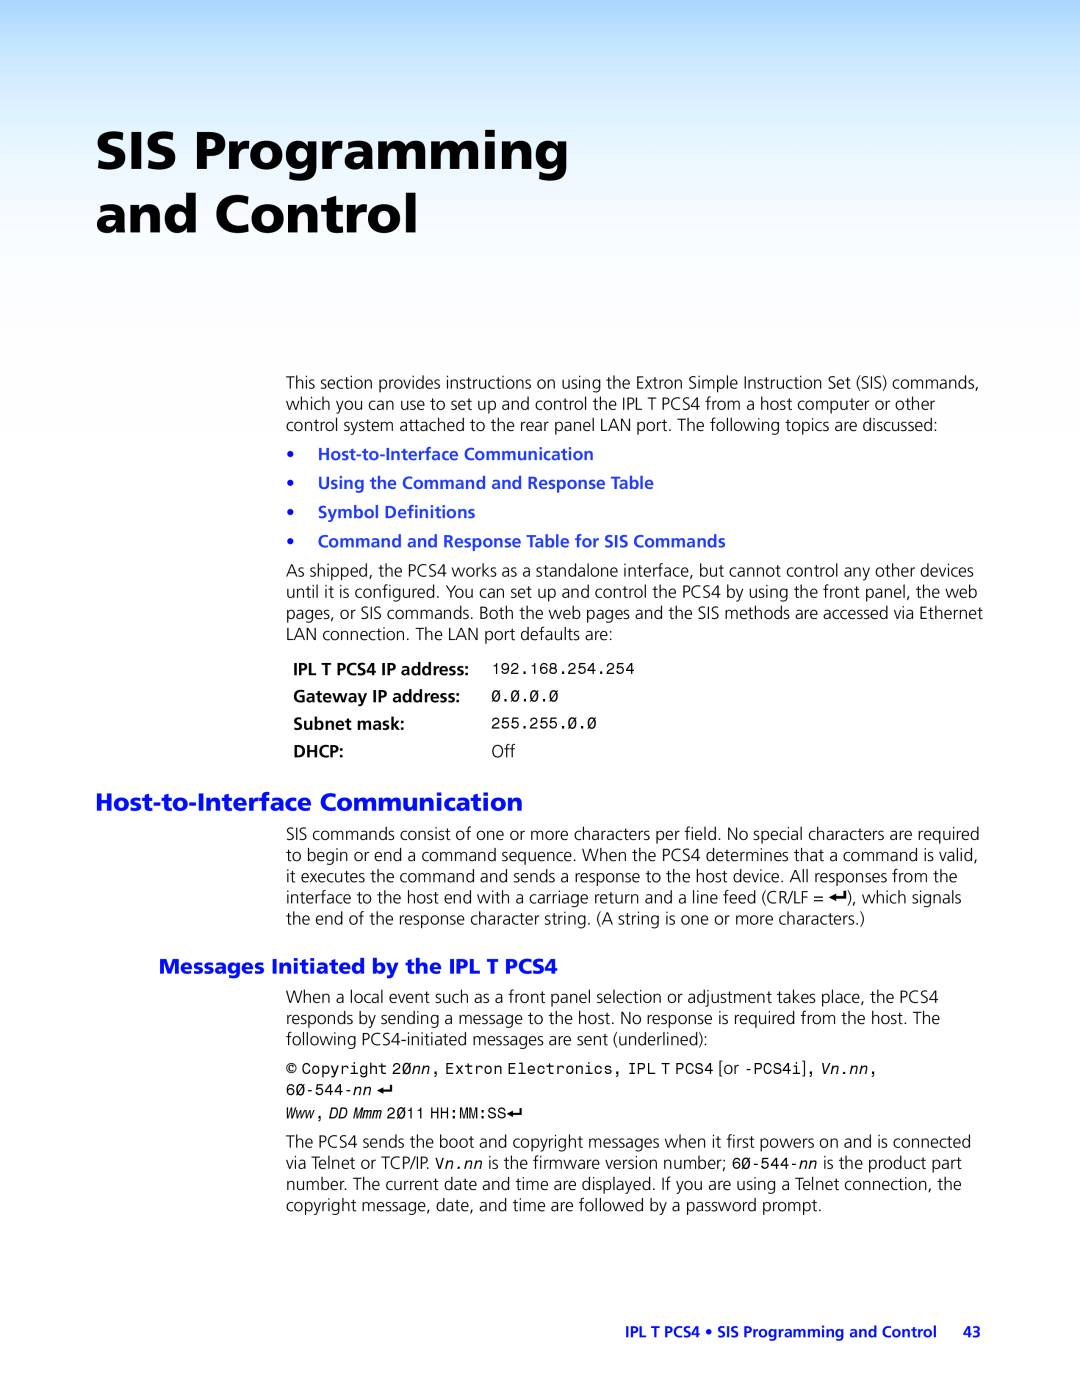 Extron electronic IPL T PCS4 SIS Programming and Control, Host-to-Interface Communication, Subnet mask, Gateway IP address 